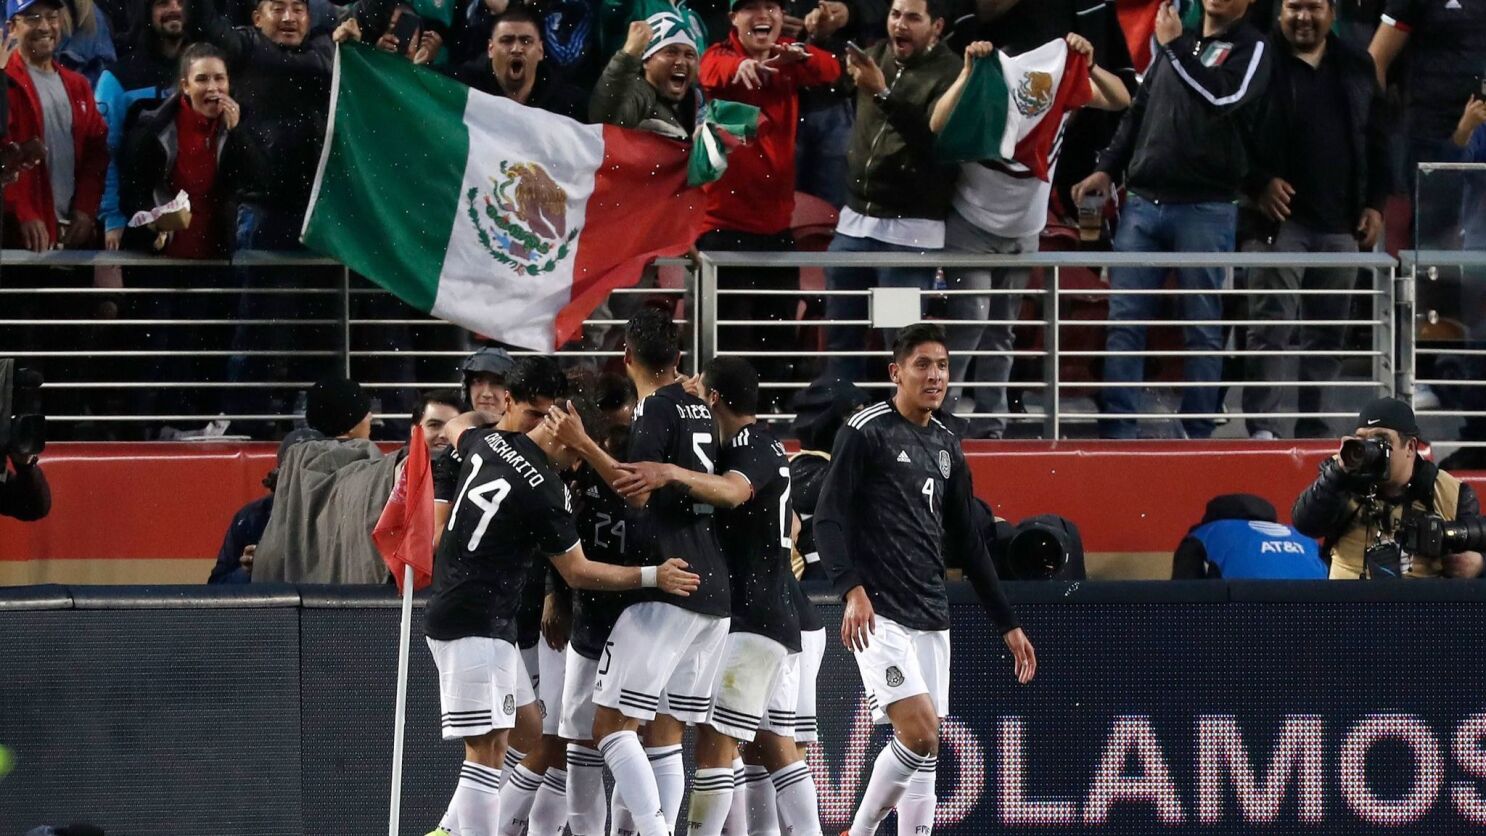 Mexico tops Paraguay 4-2 before 50,317 in Santa Clara - Los Angeles Times